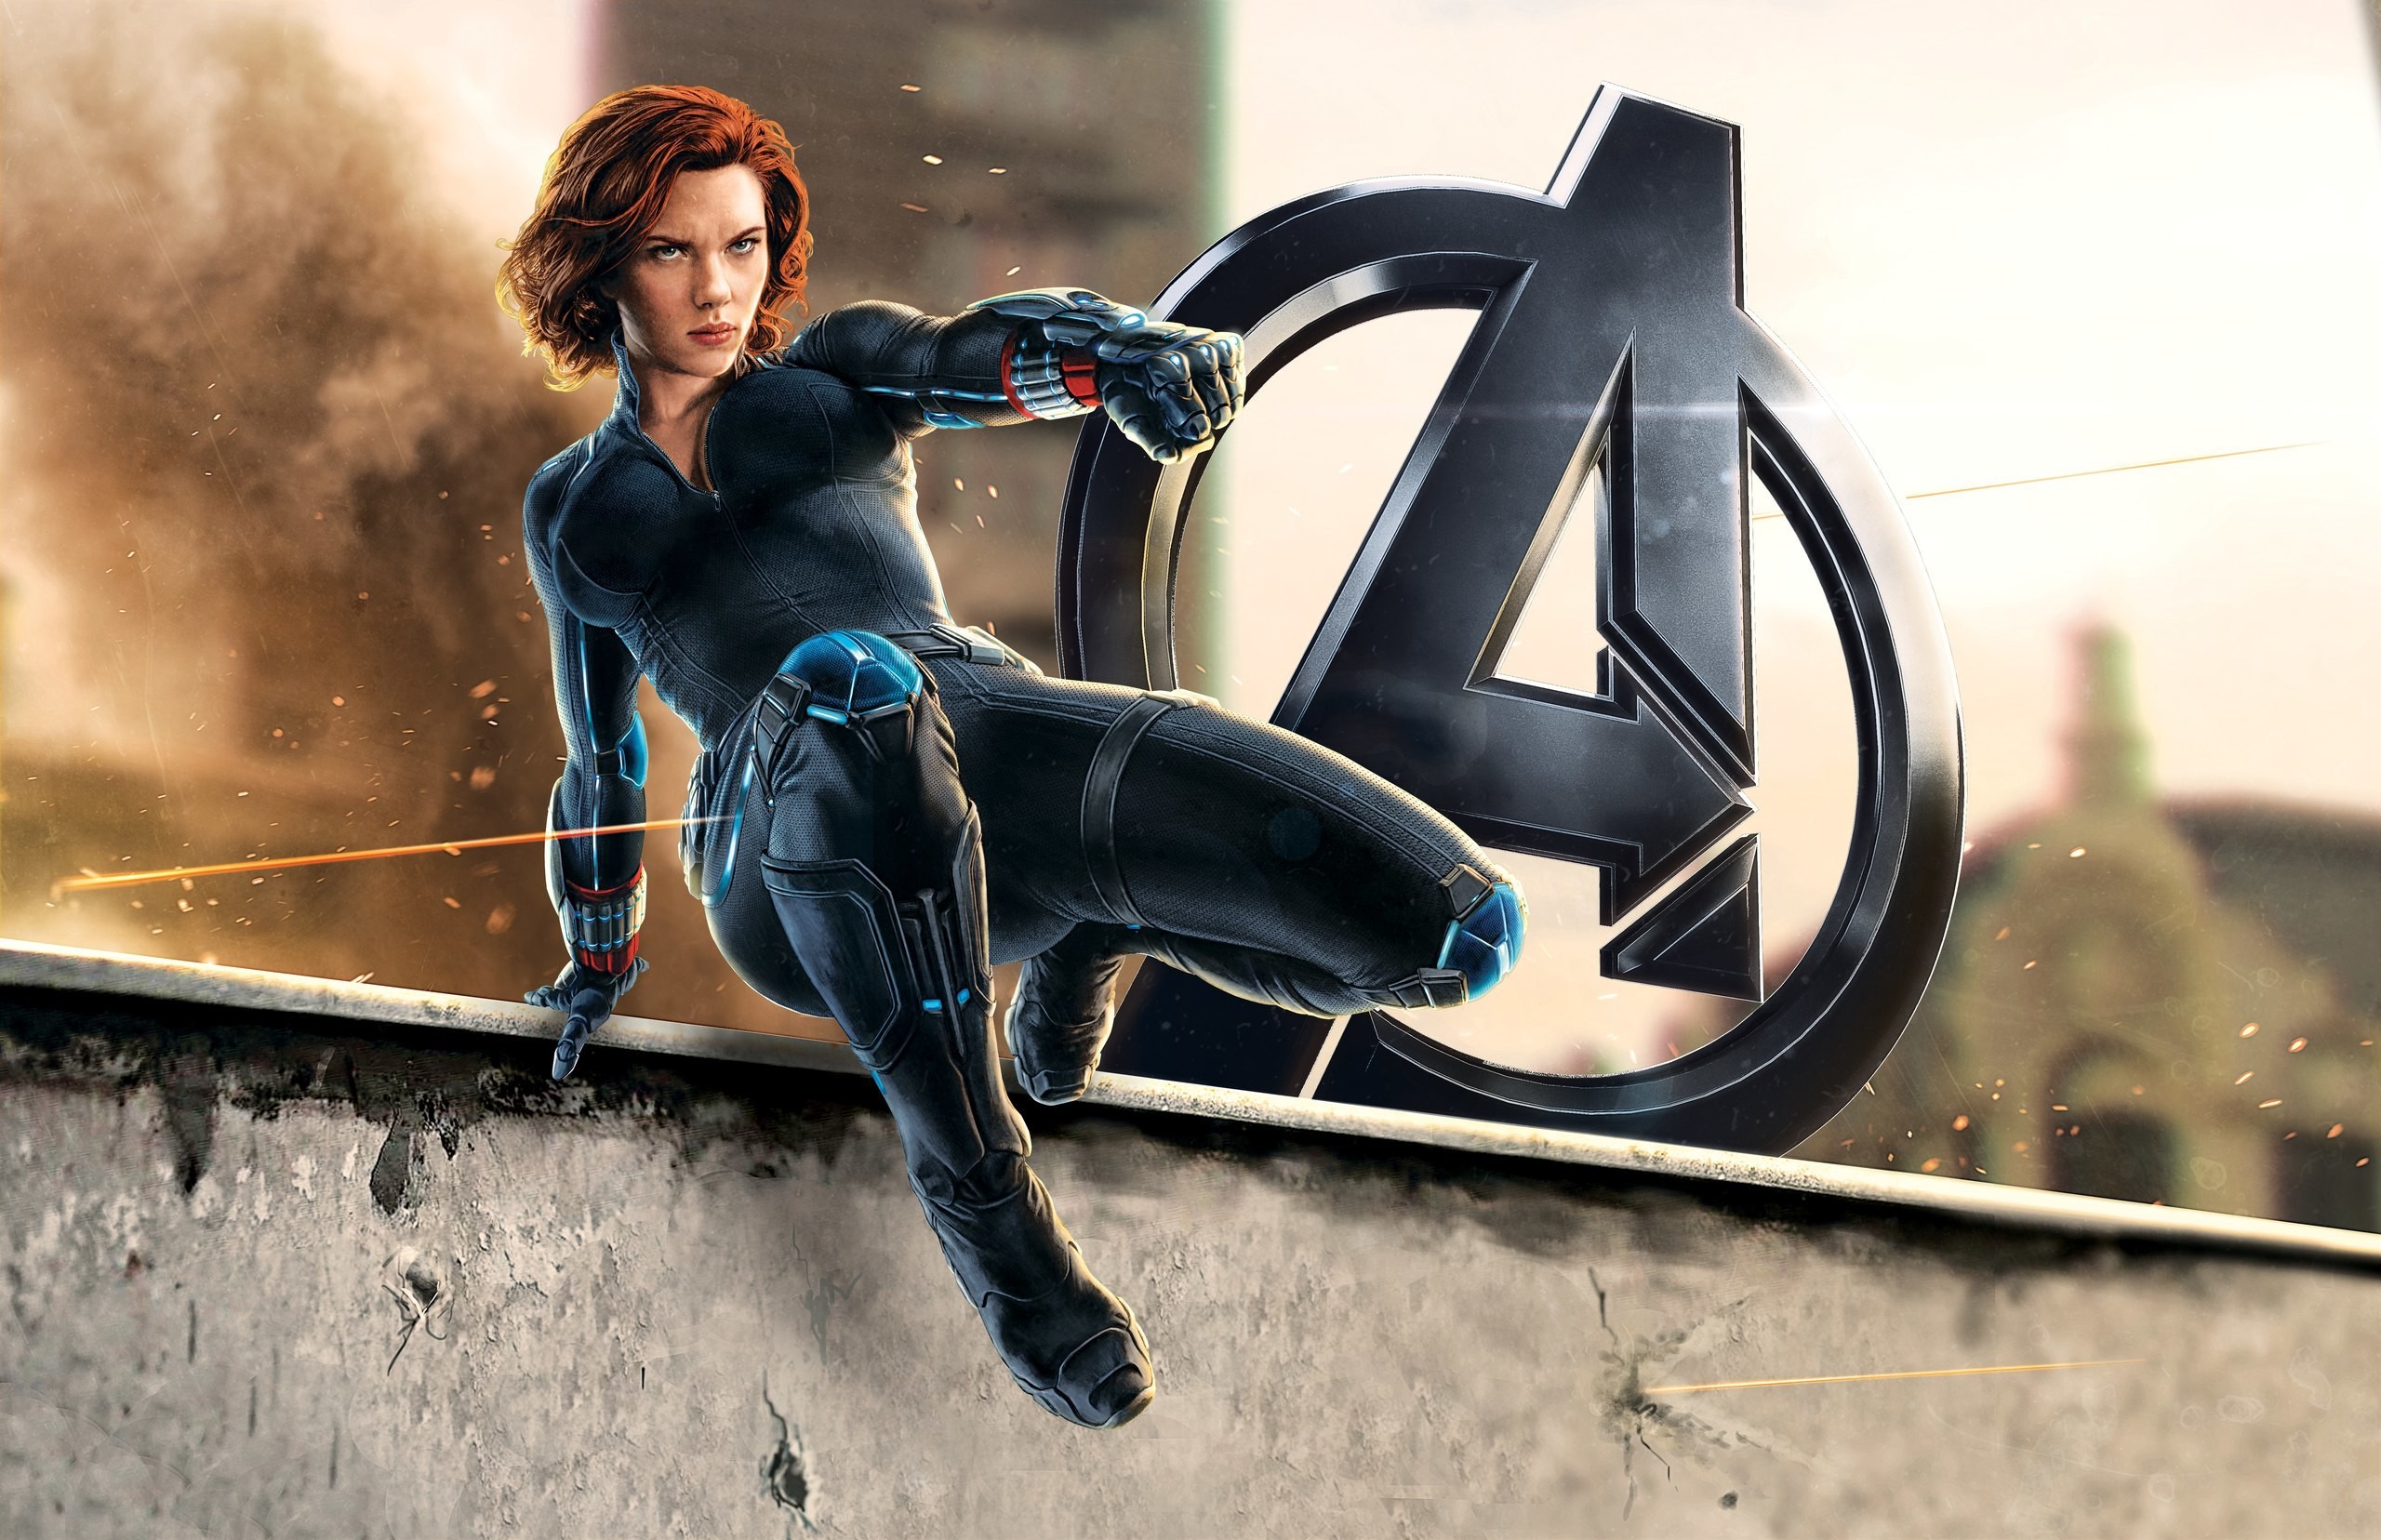 General 2560x1656 Avengers: Age of Ultron Black Widow superhero superheroines Scarlett Johansson Marvel Cinematic Universe women redhead